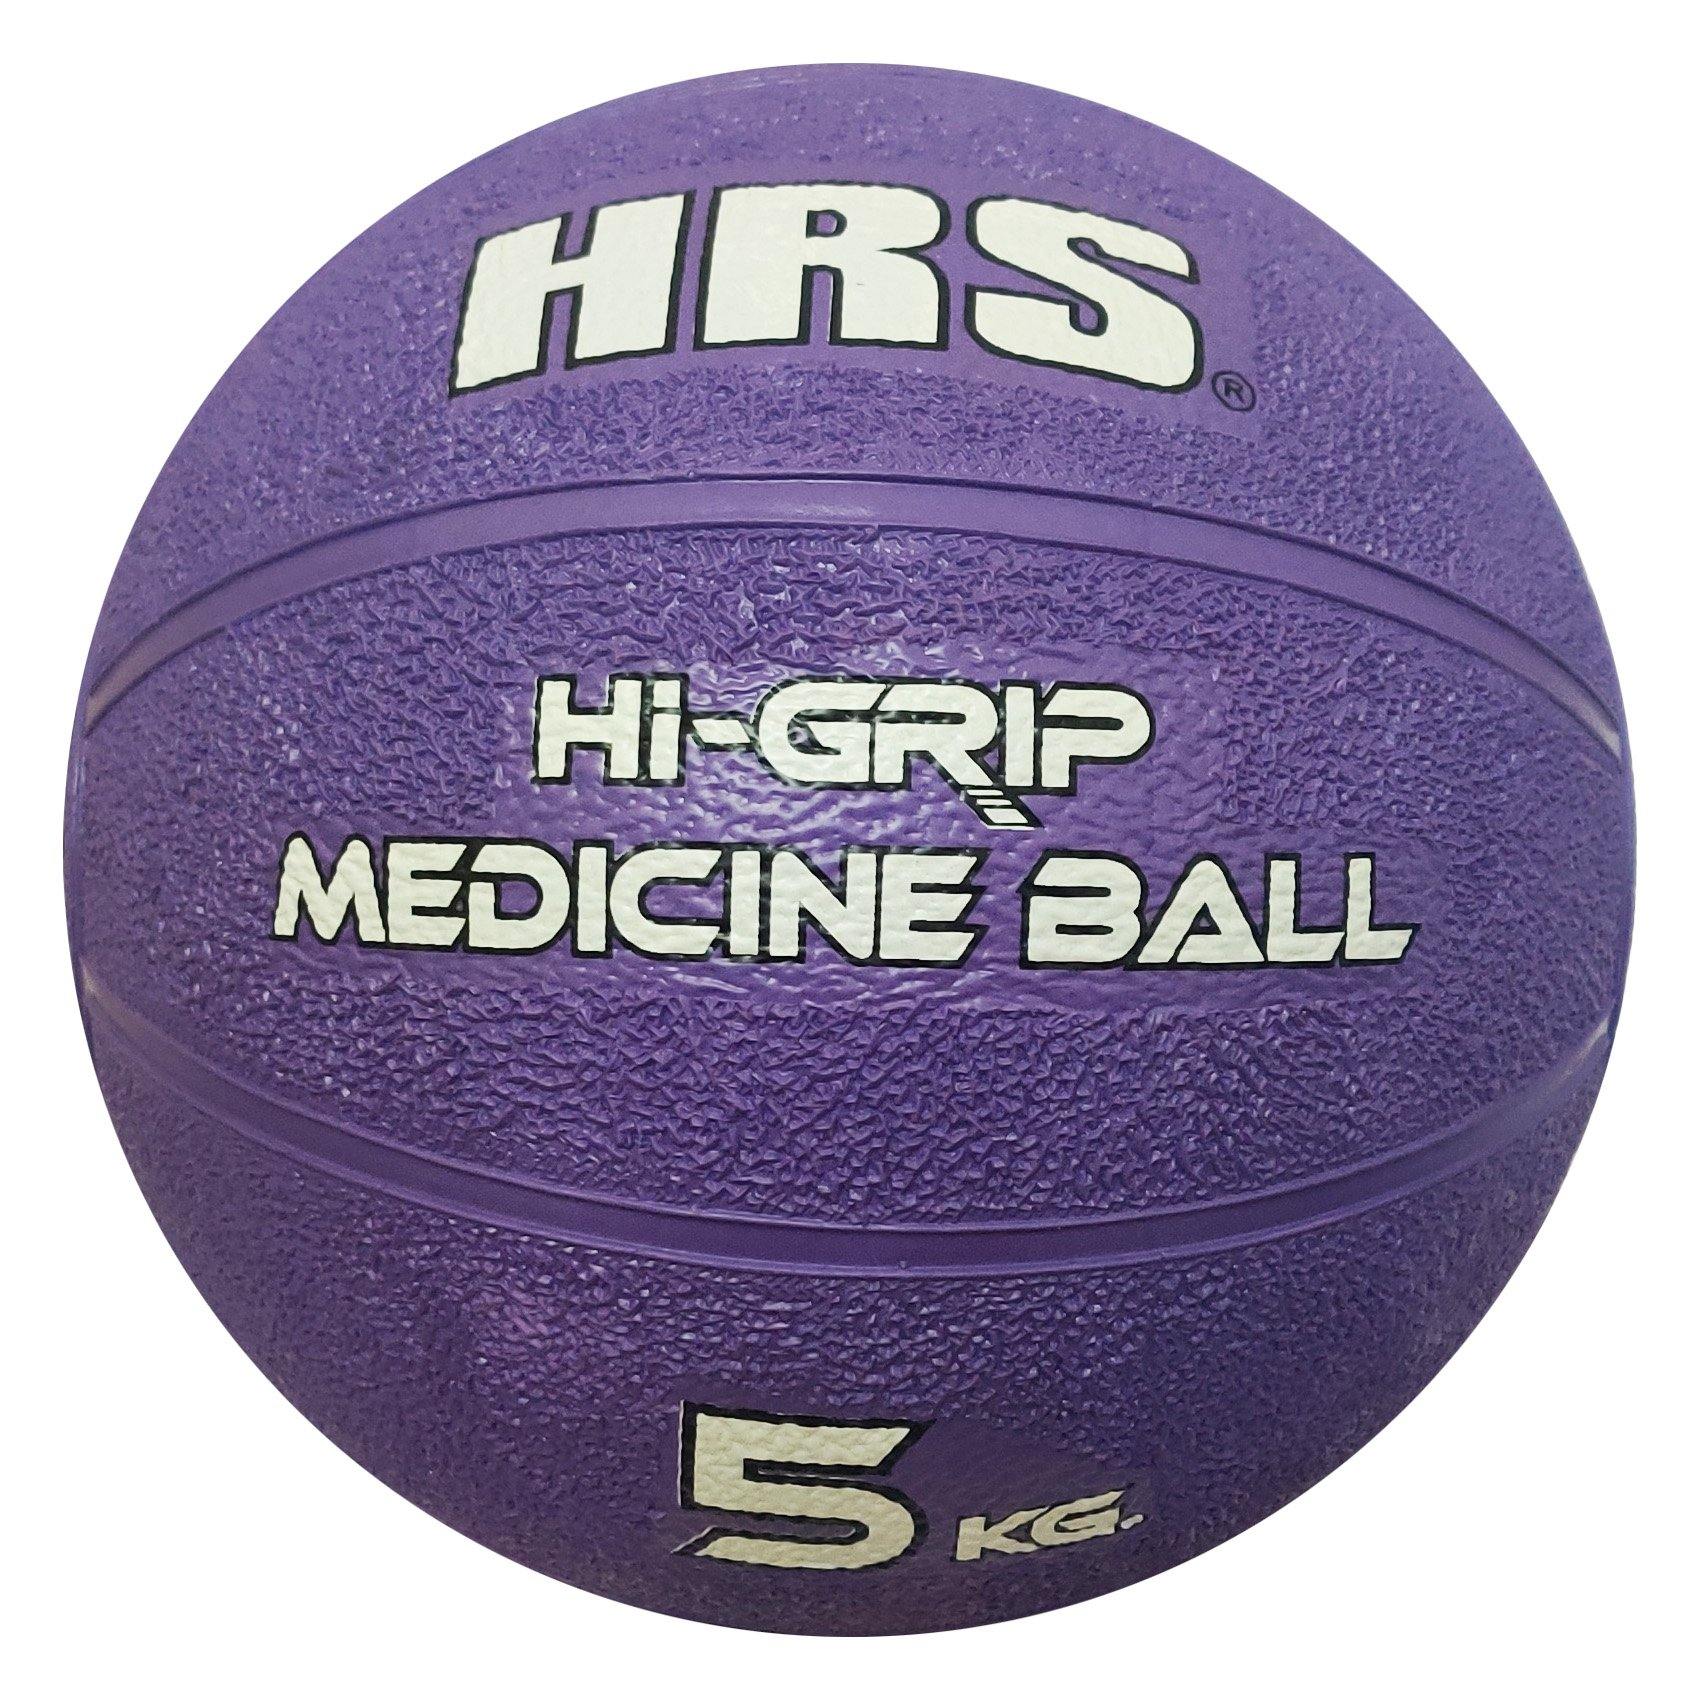 HRS Rubber Medine Ball, 5 kg (without handle), Purple - Best Price online Prokicksports.com